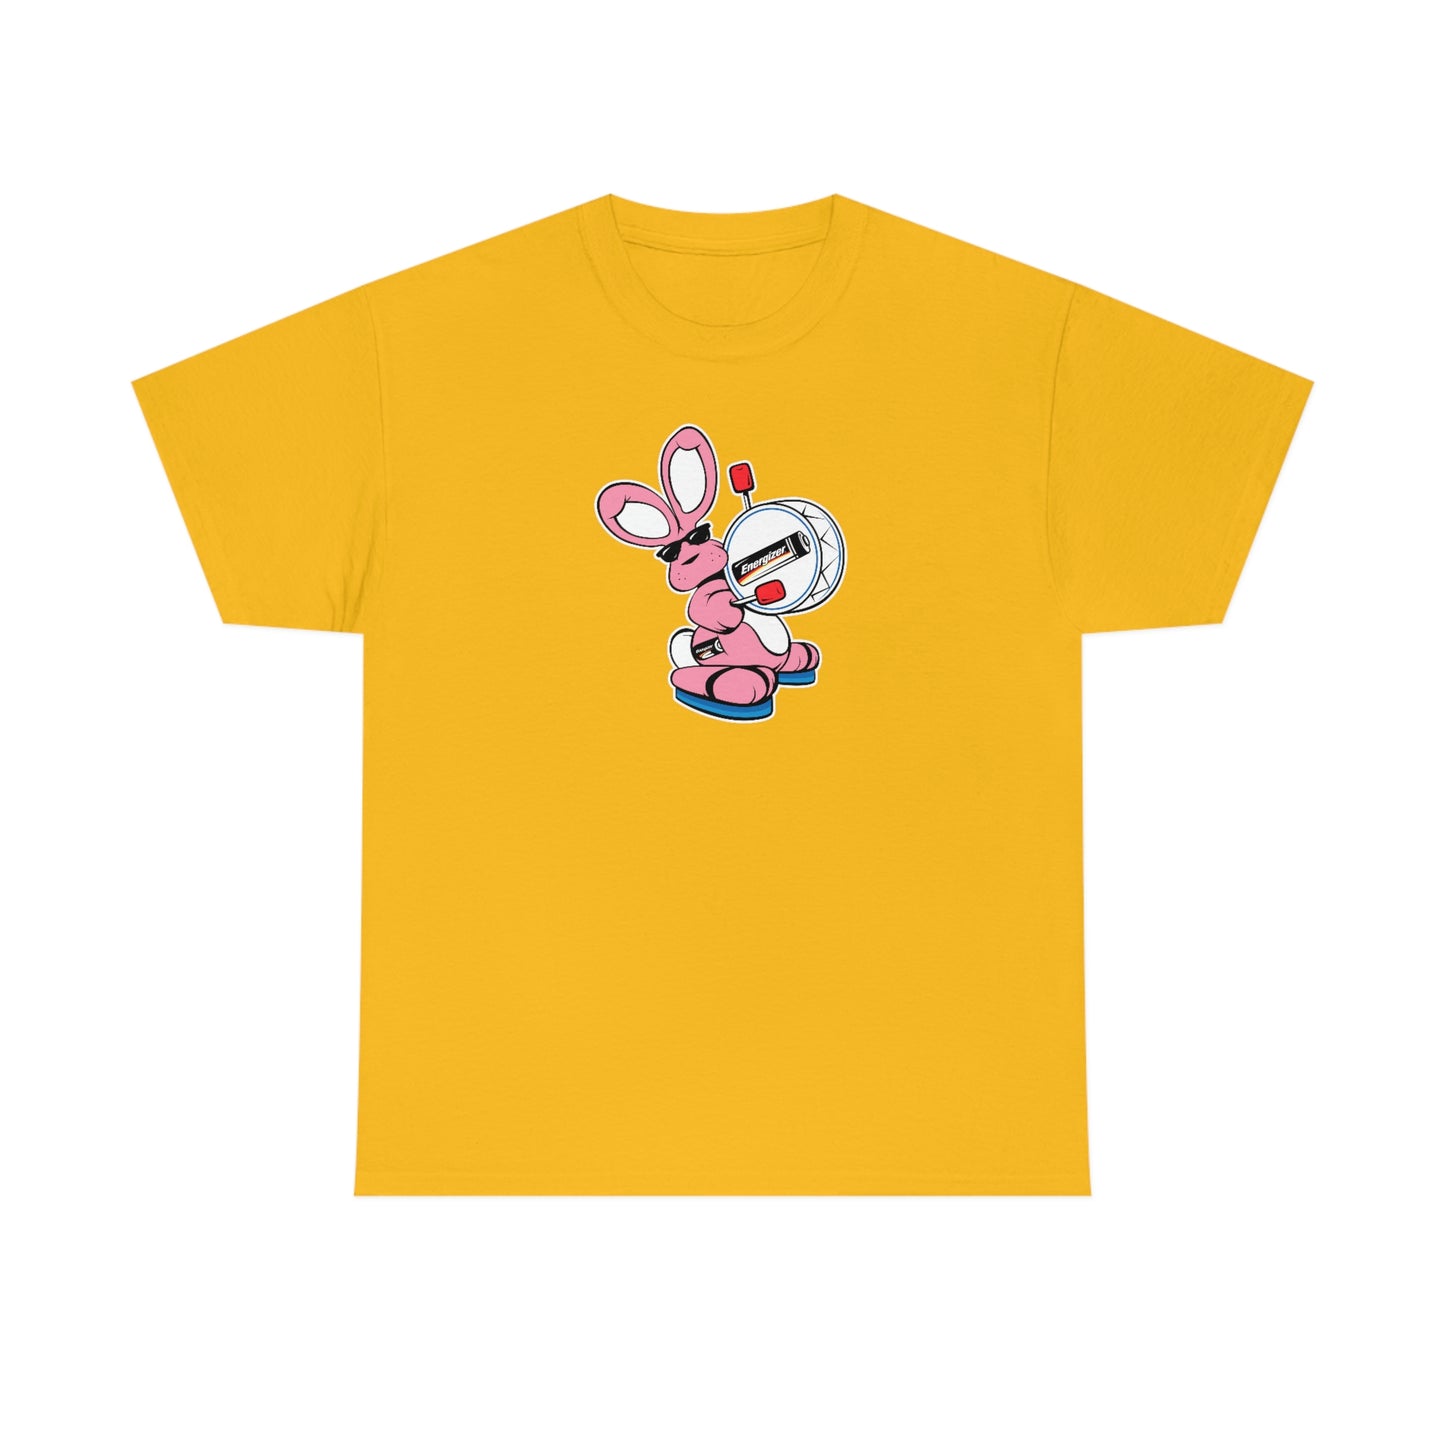 Energizer Bunny T-Shirt